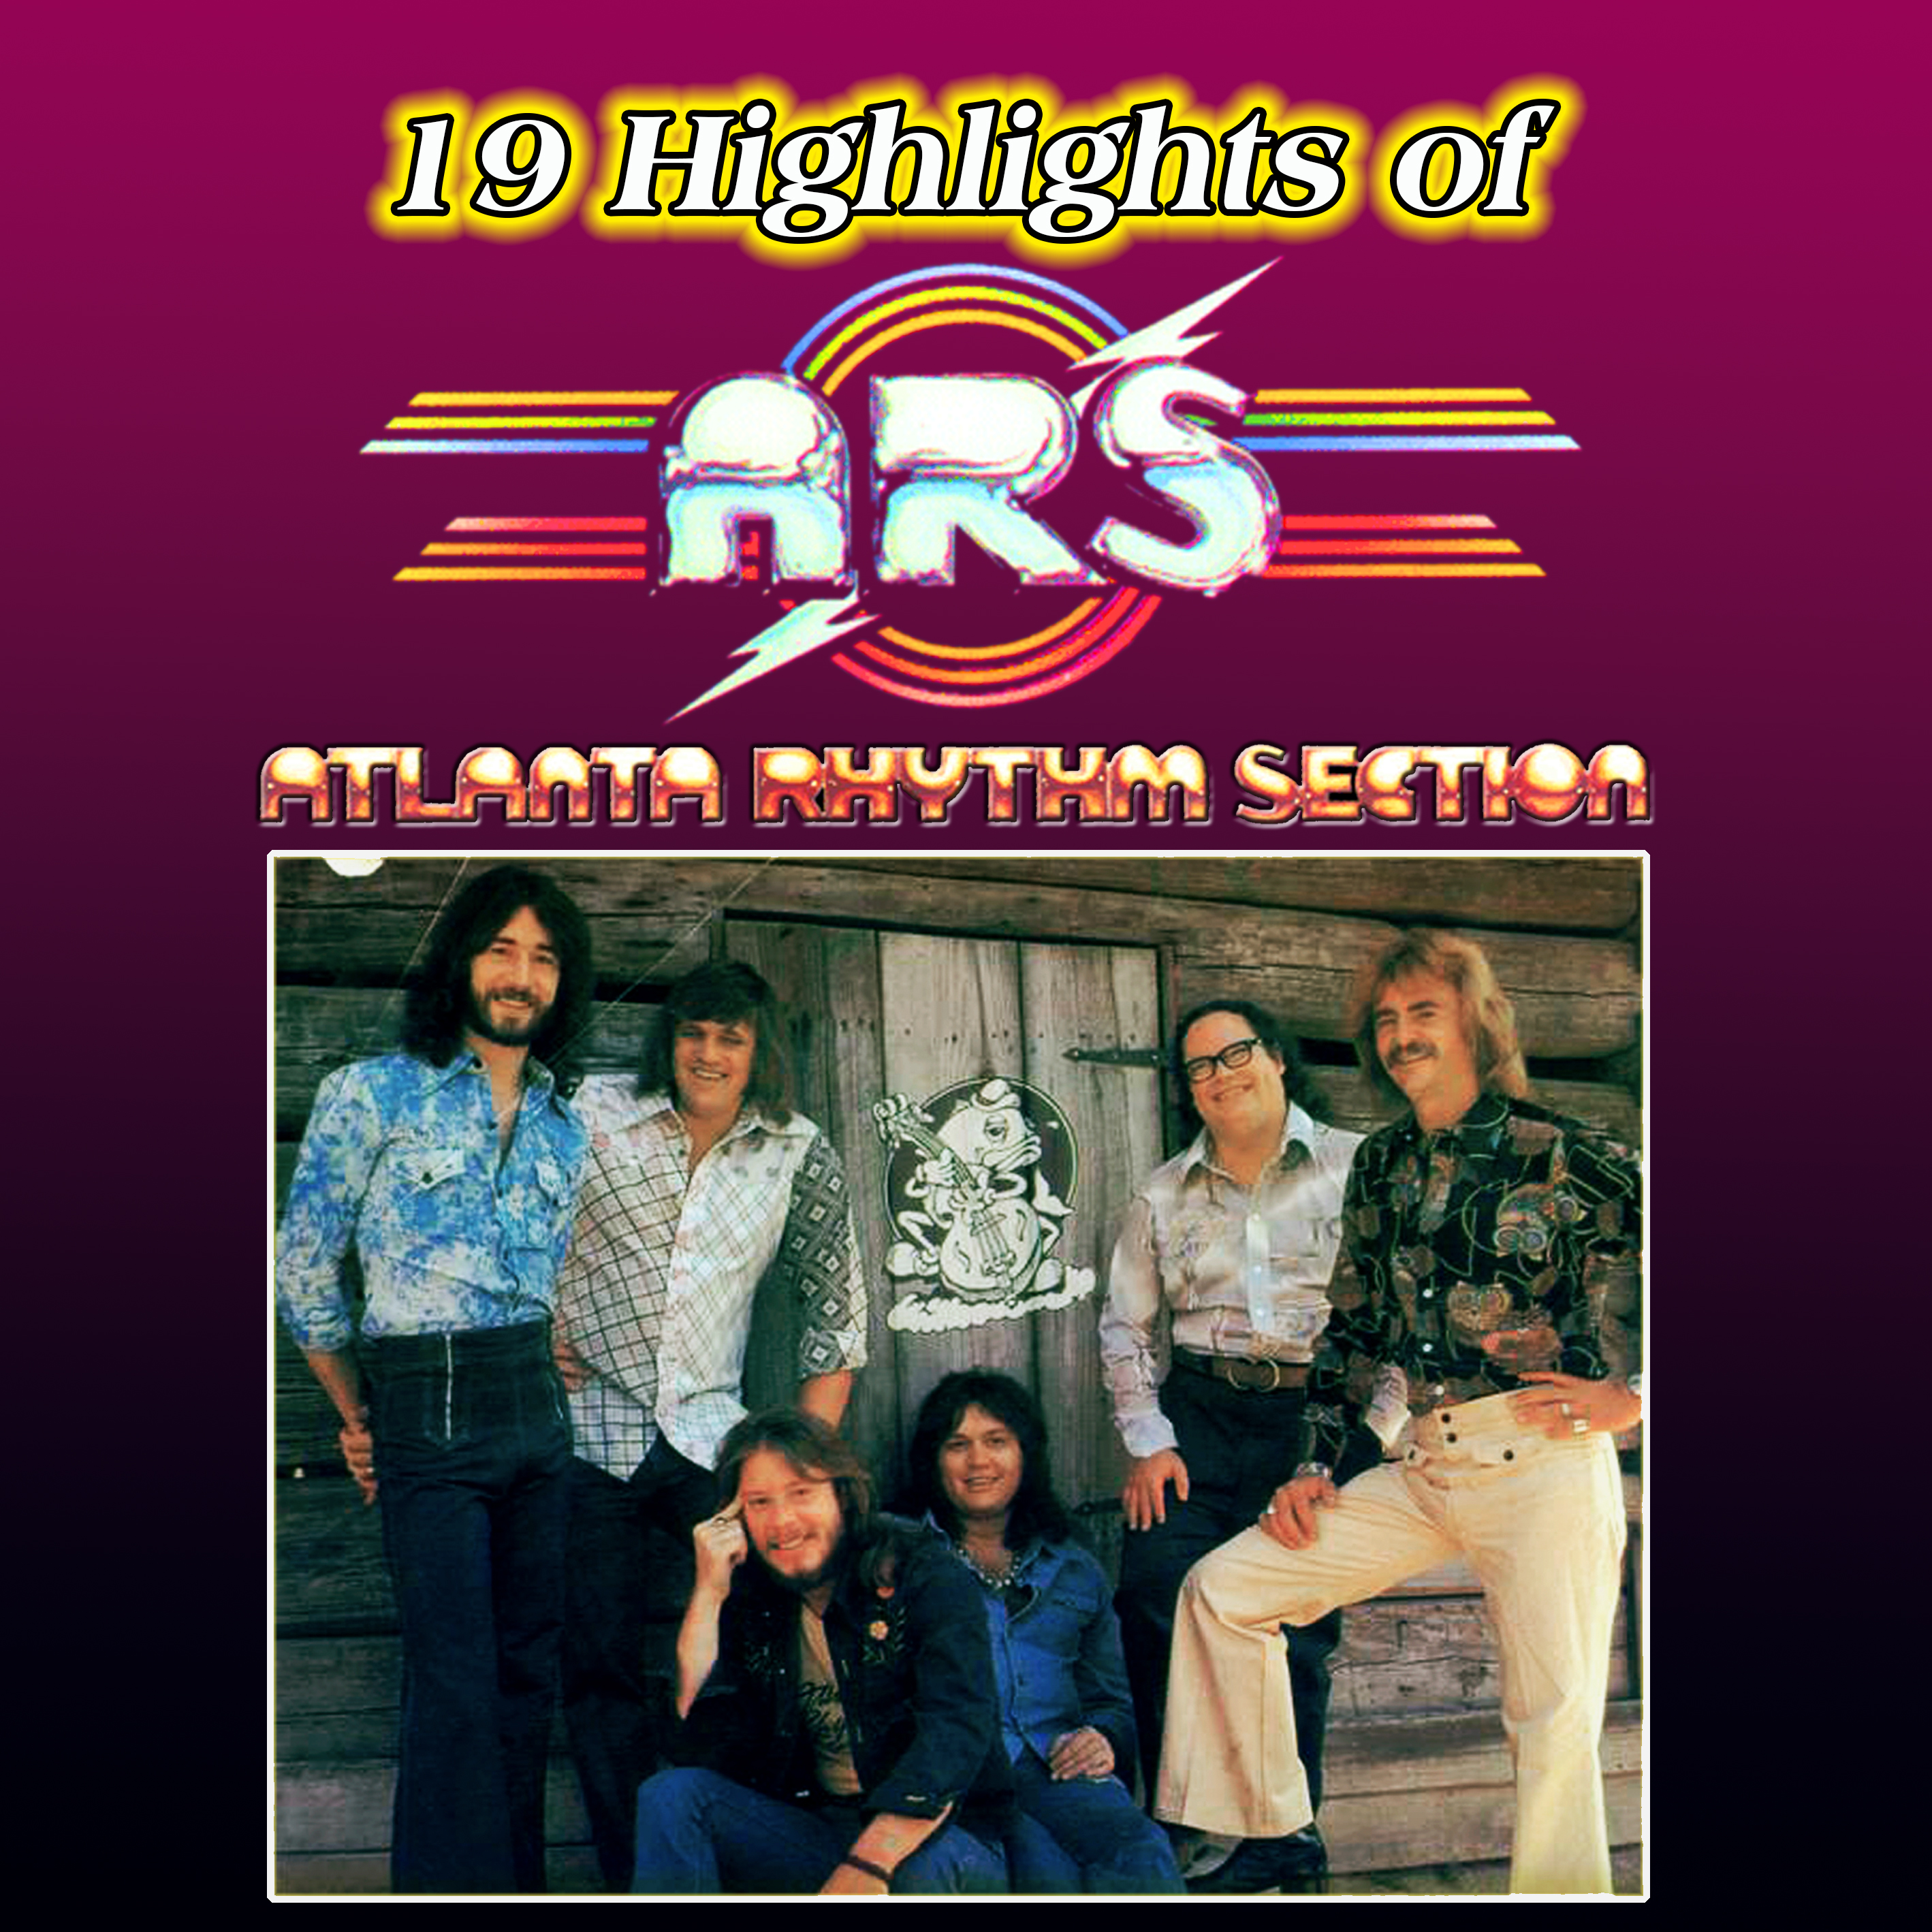 19 Highlights Of Atlanta Rhythm Section (By Art&Music)